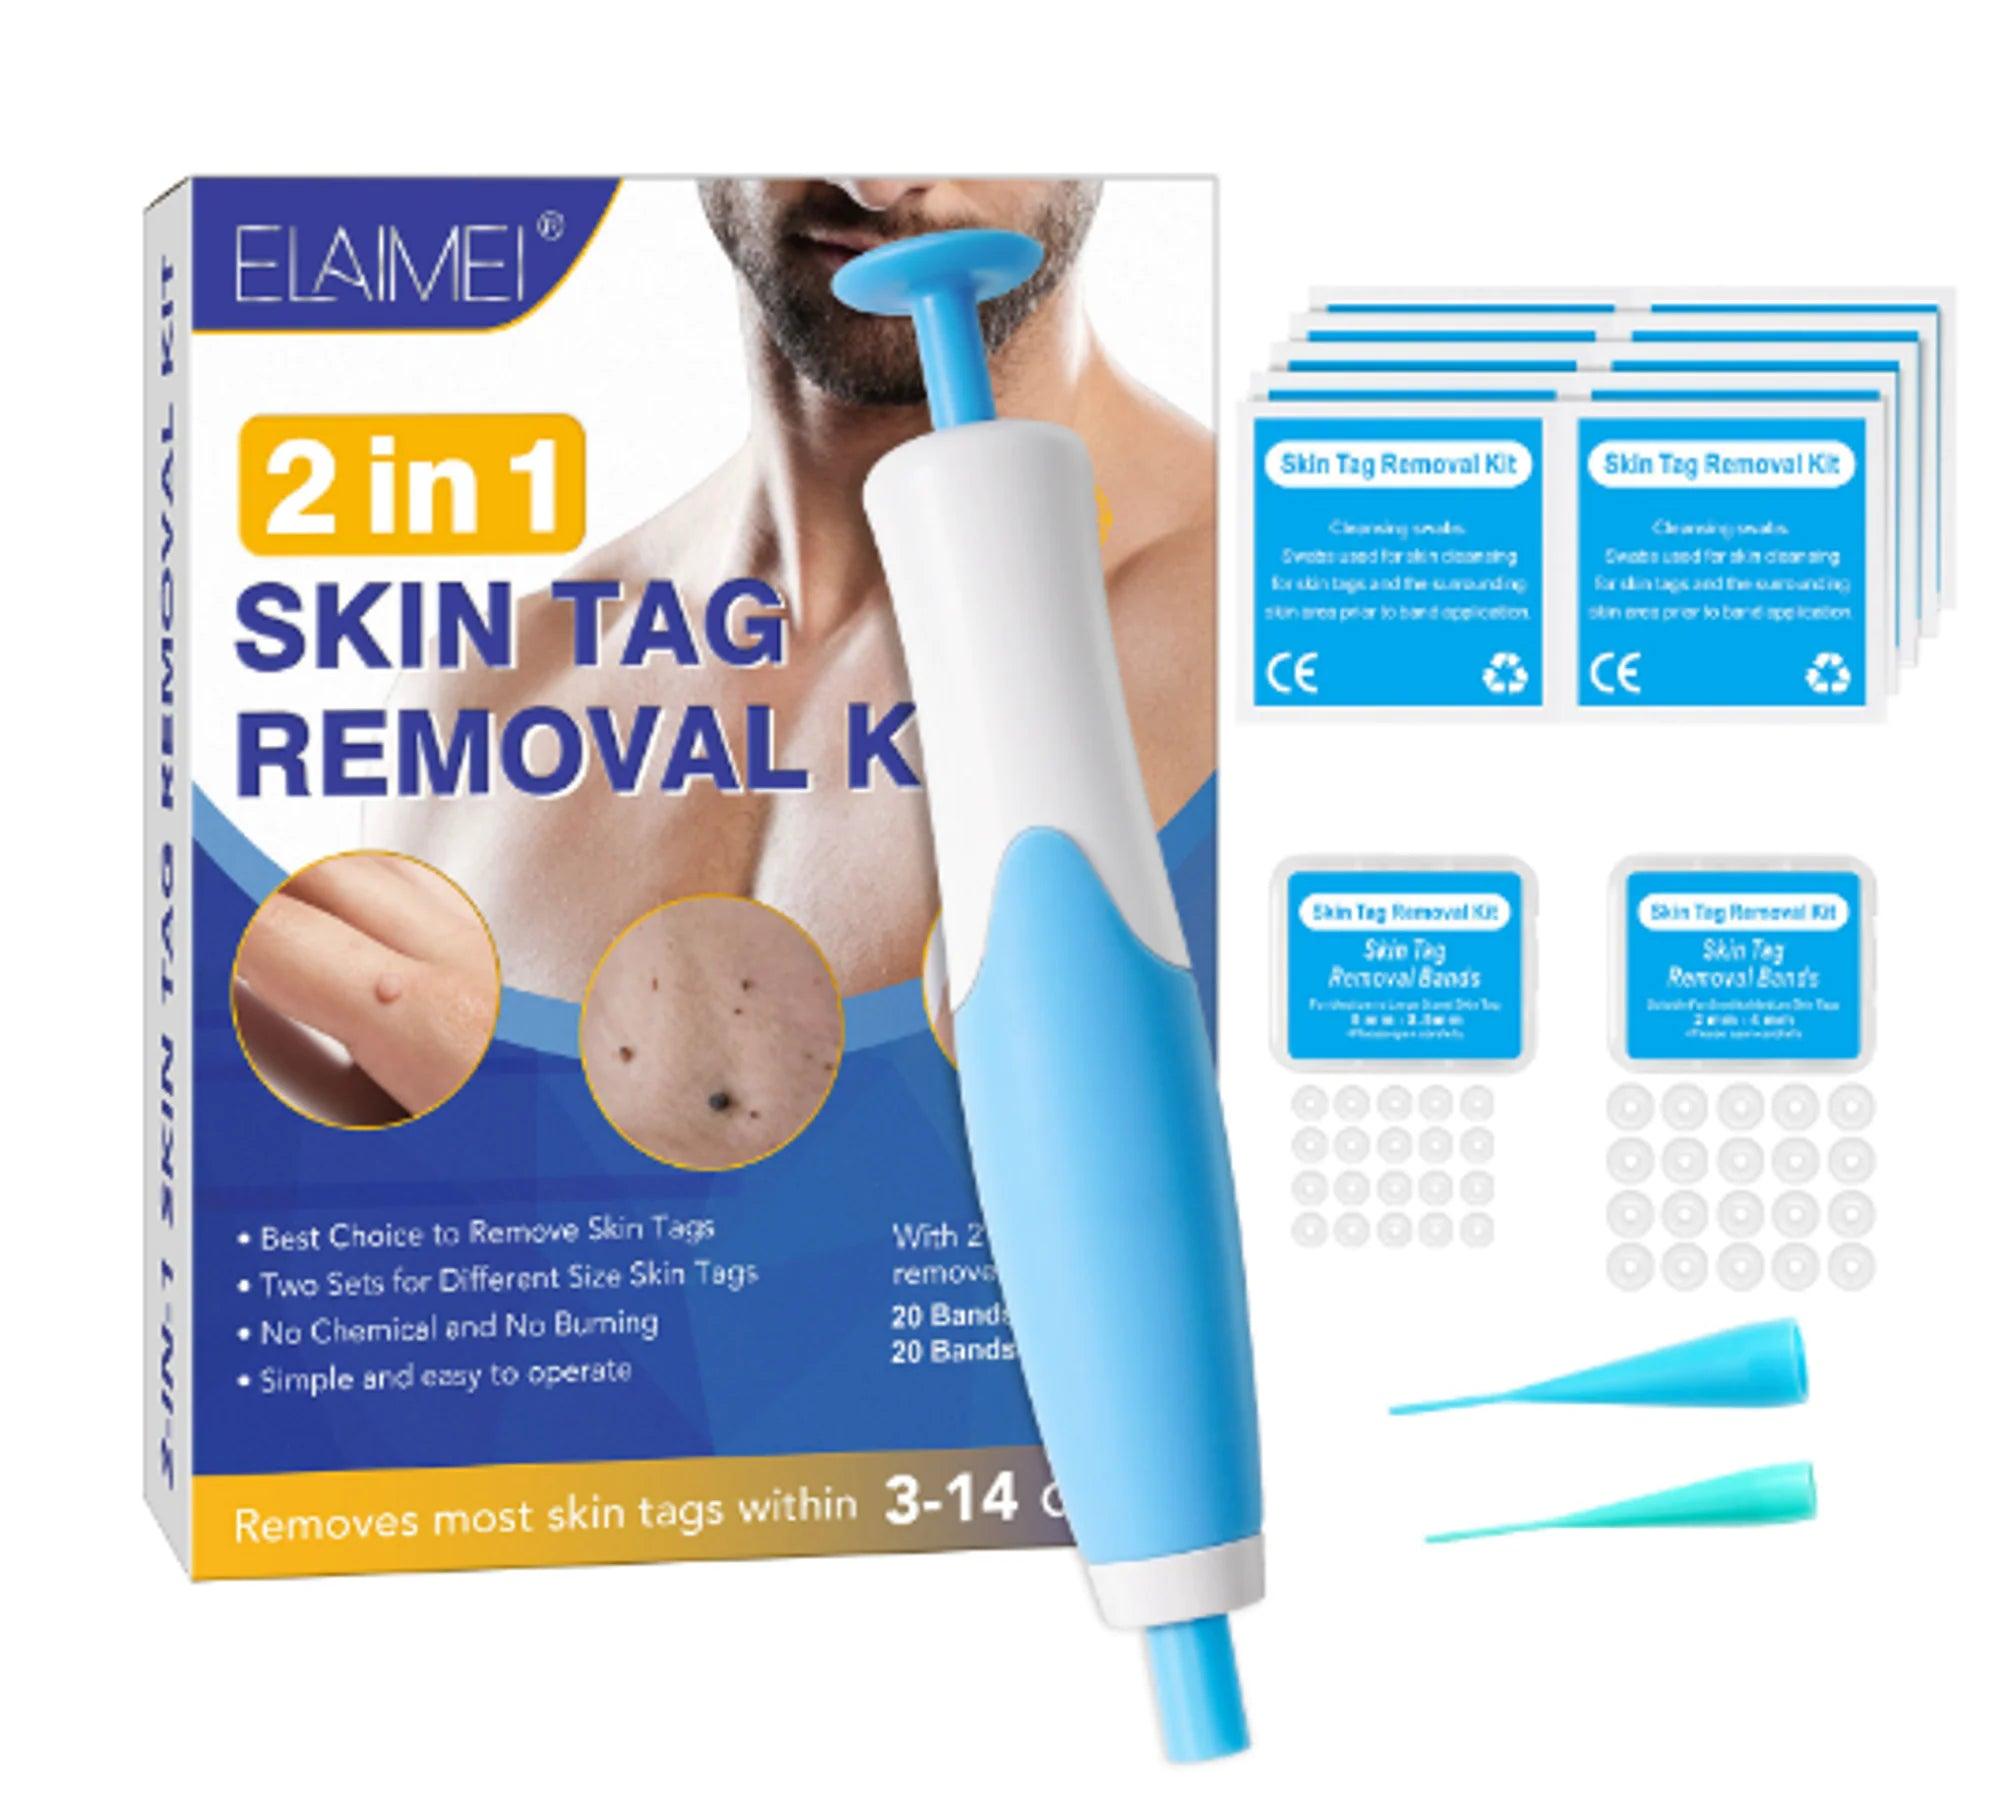 Revolutionary Automatic Skin Tag Removal Kit - ACO Marketplace